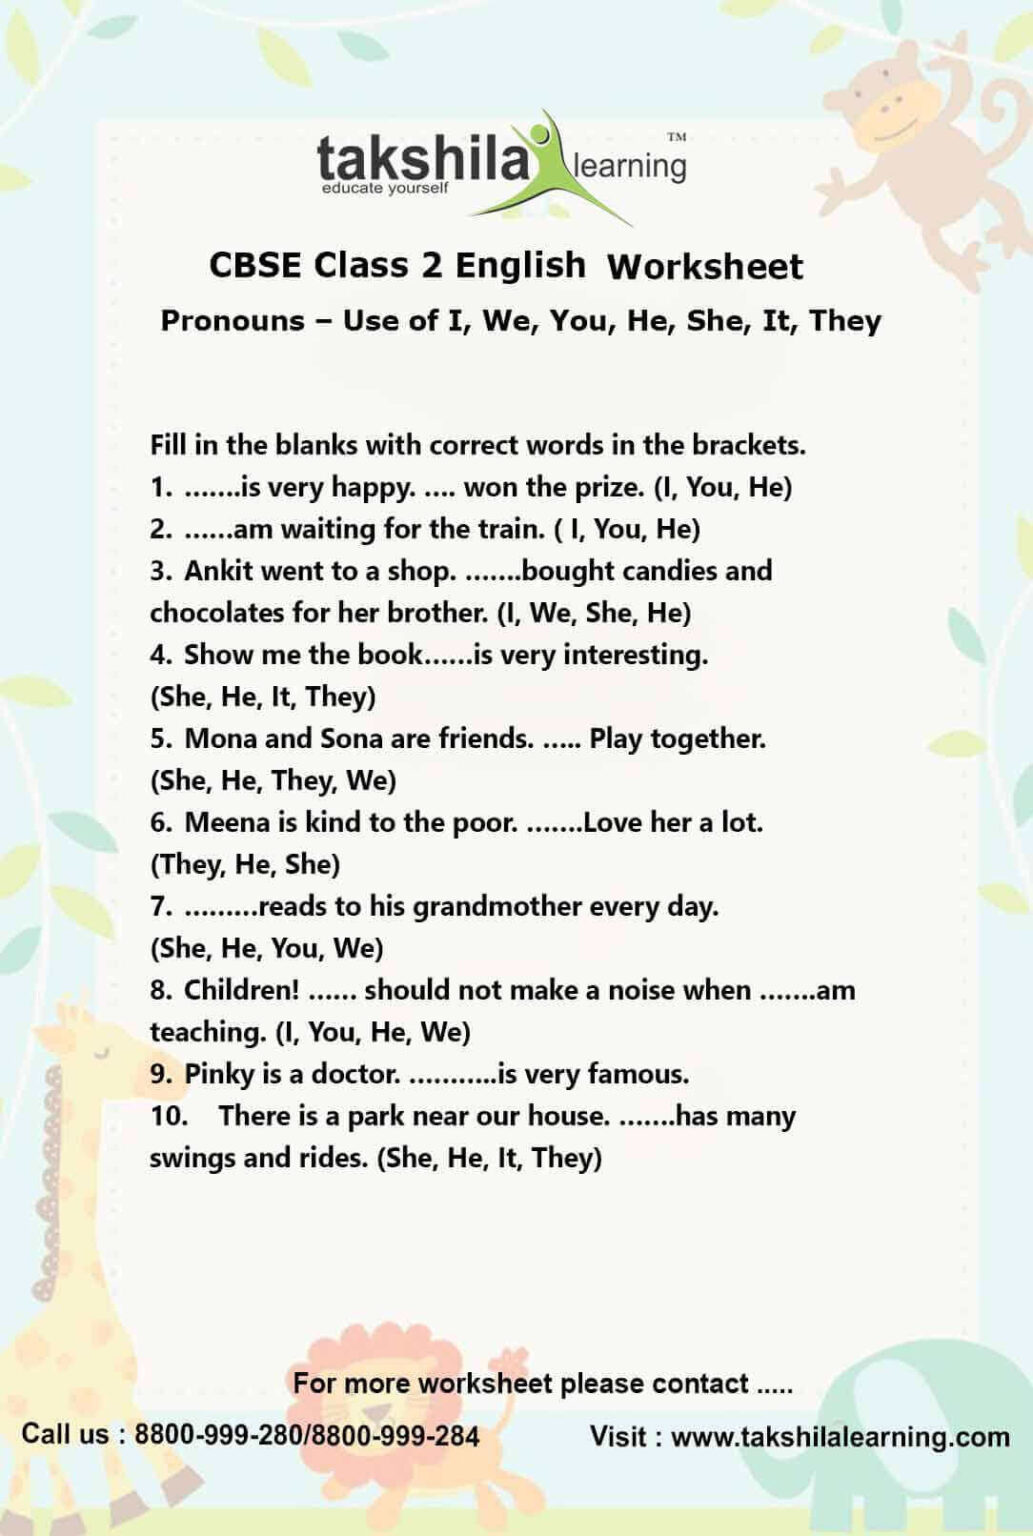 use-of-pronouns-worksheet-for-class-2-english-pronoun-definition